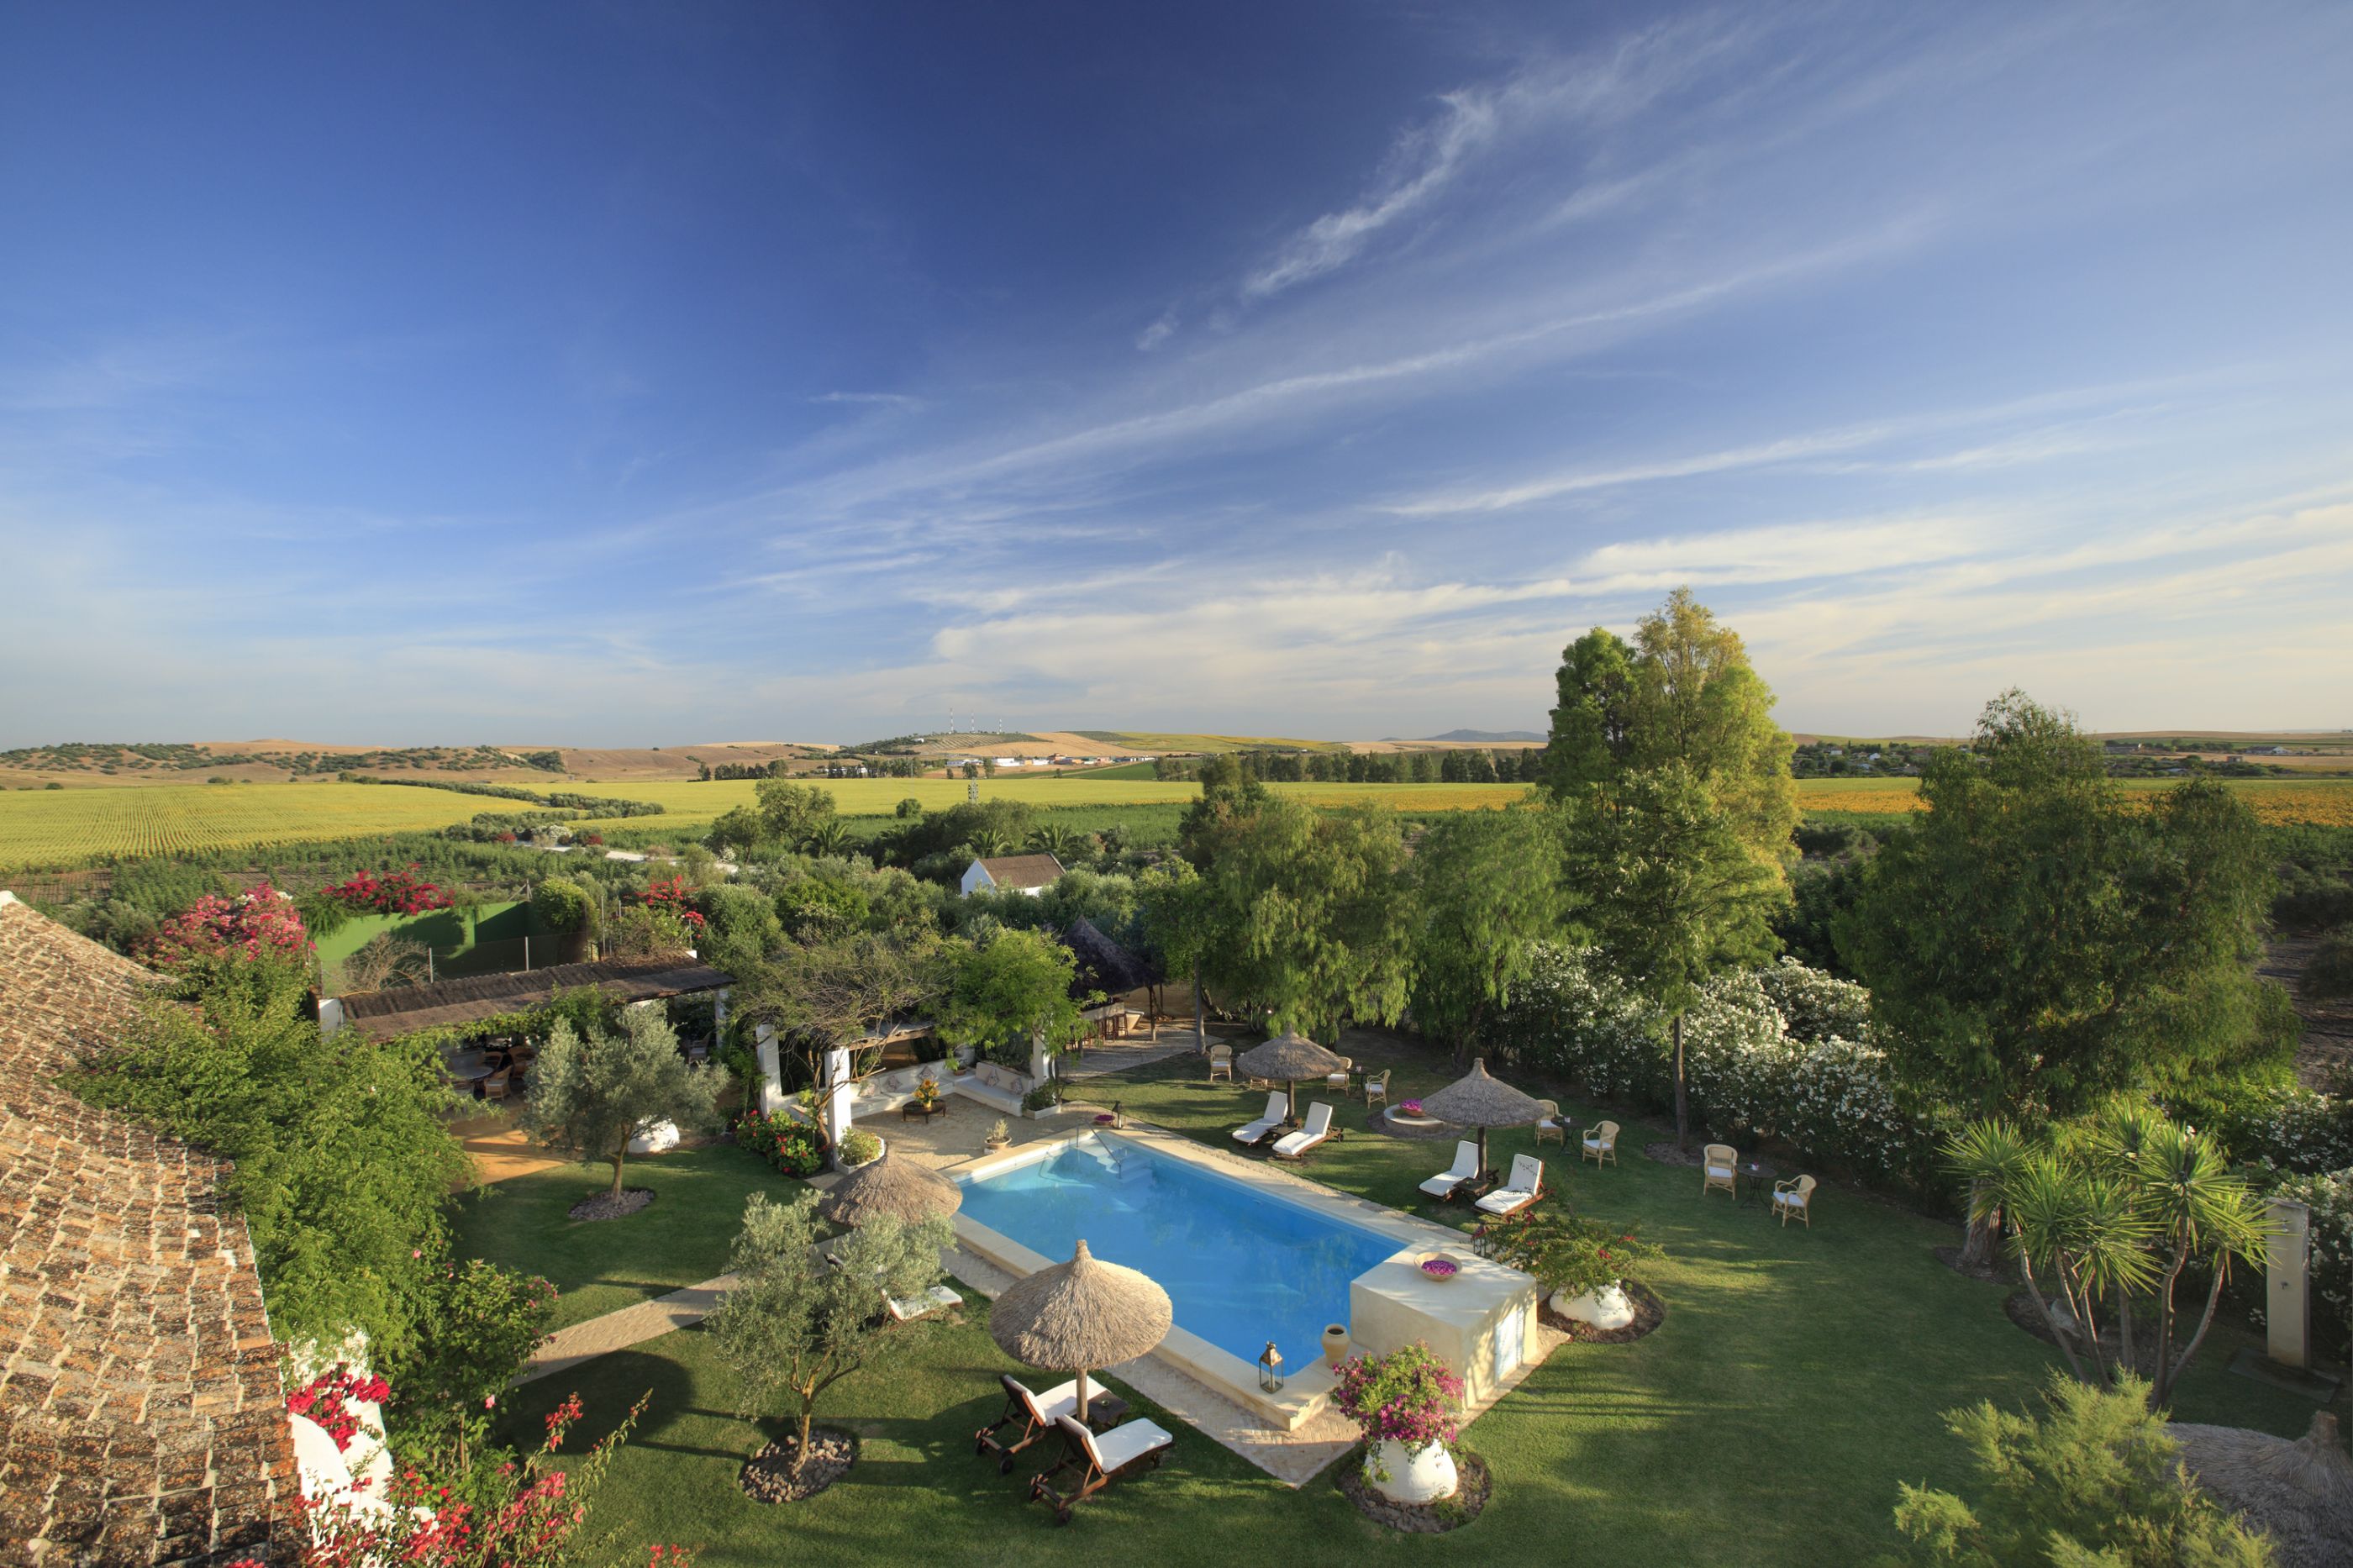 The garden with swimming pool of Hacienda de San Rafael, Spain